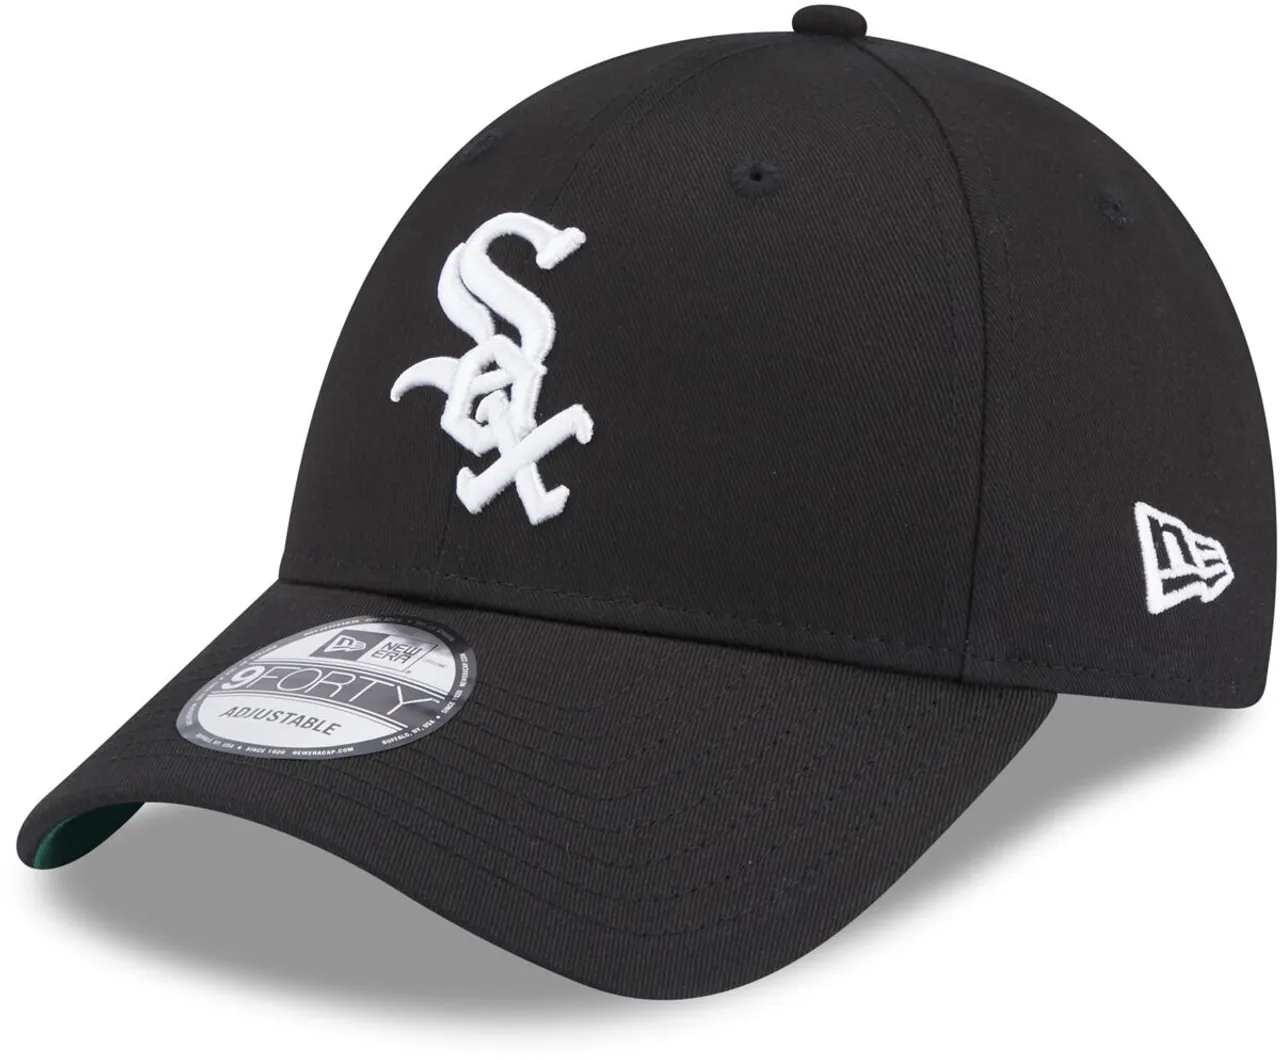 New Era - MLB 9FORTY Chicago Withe Sox Cap schwarz